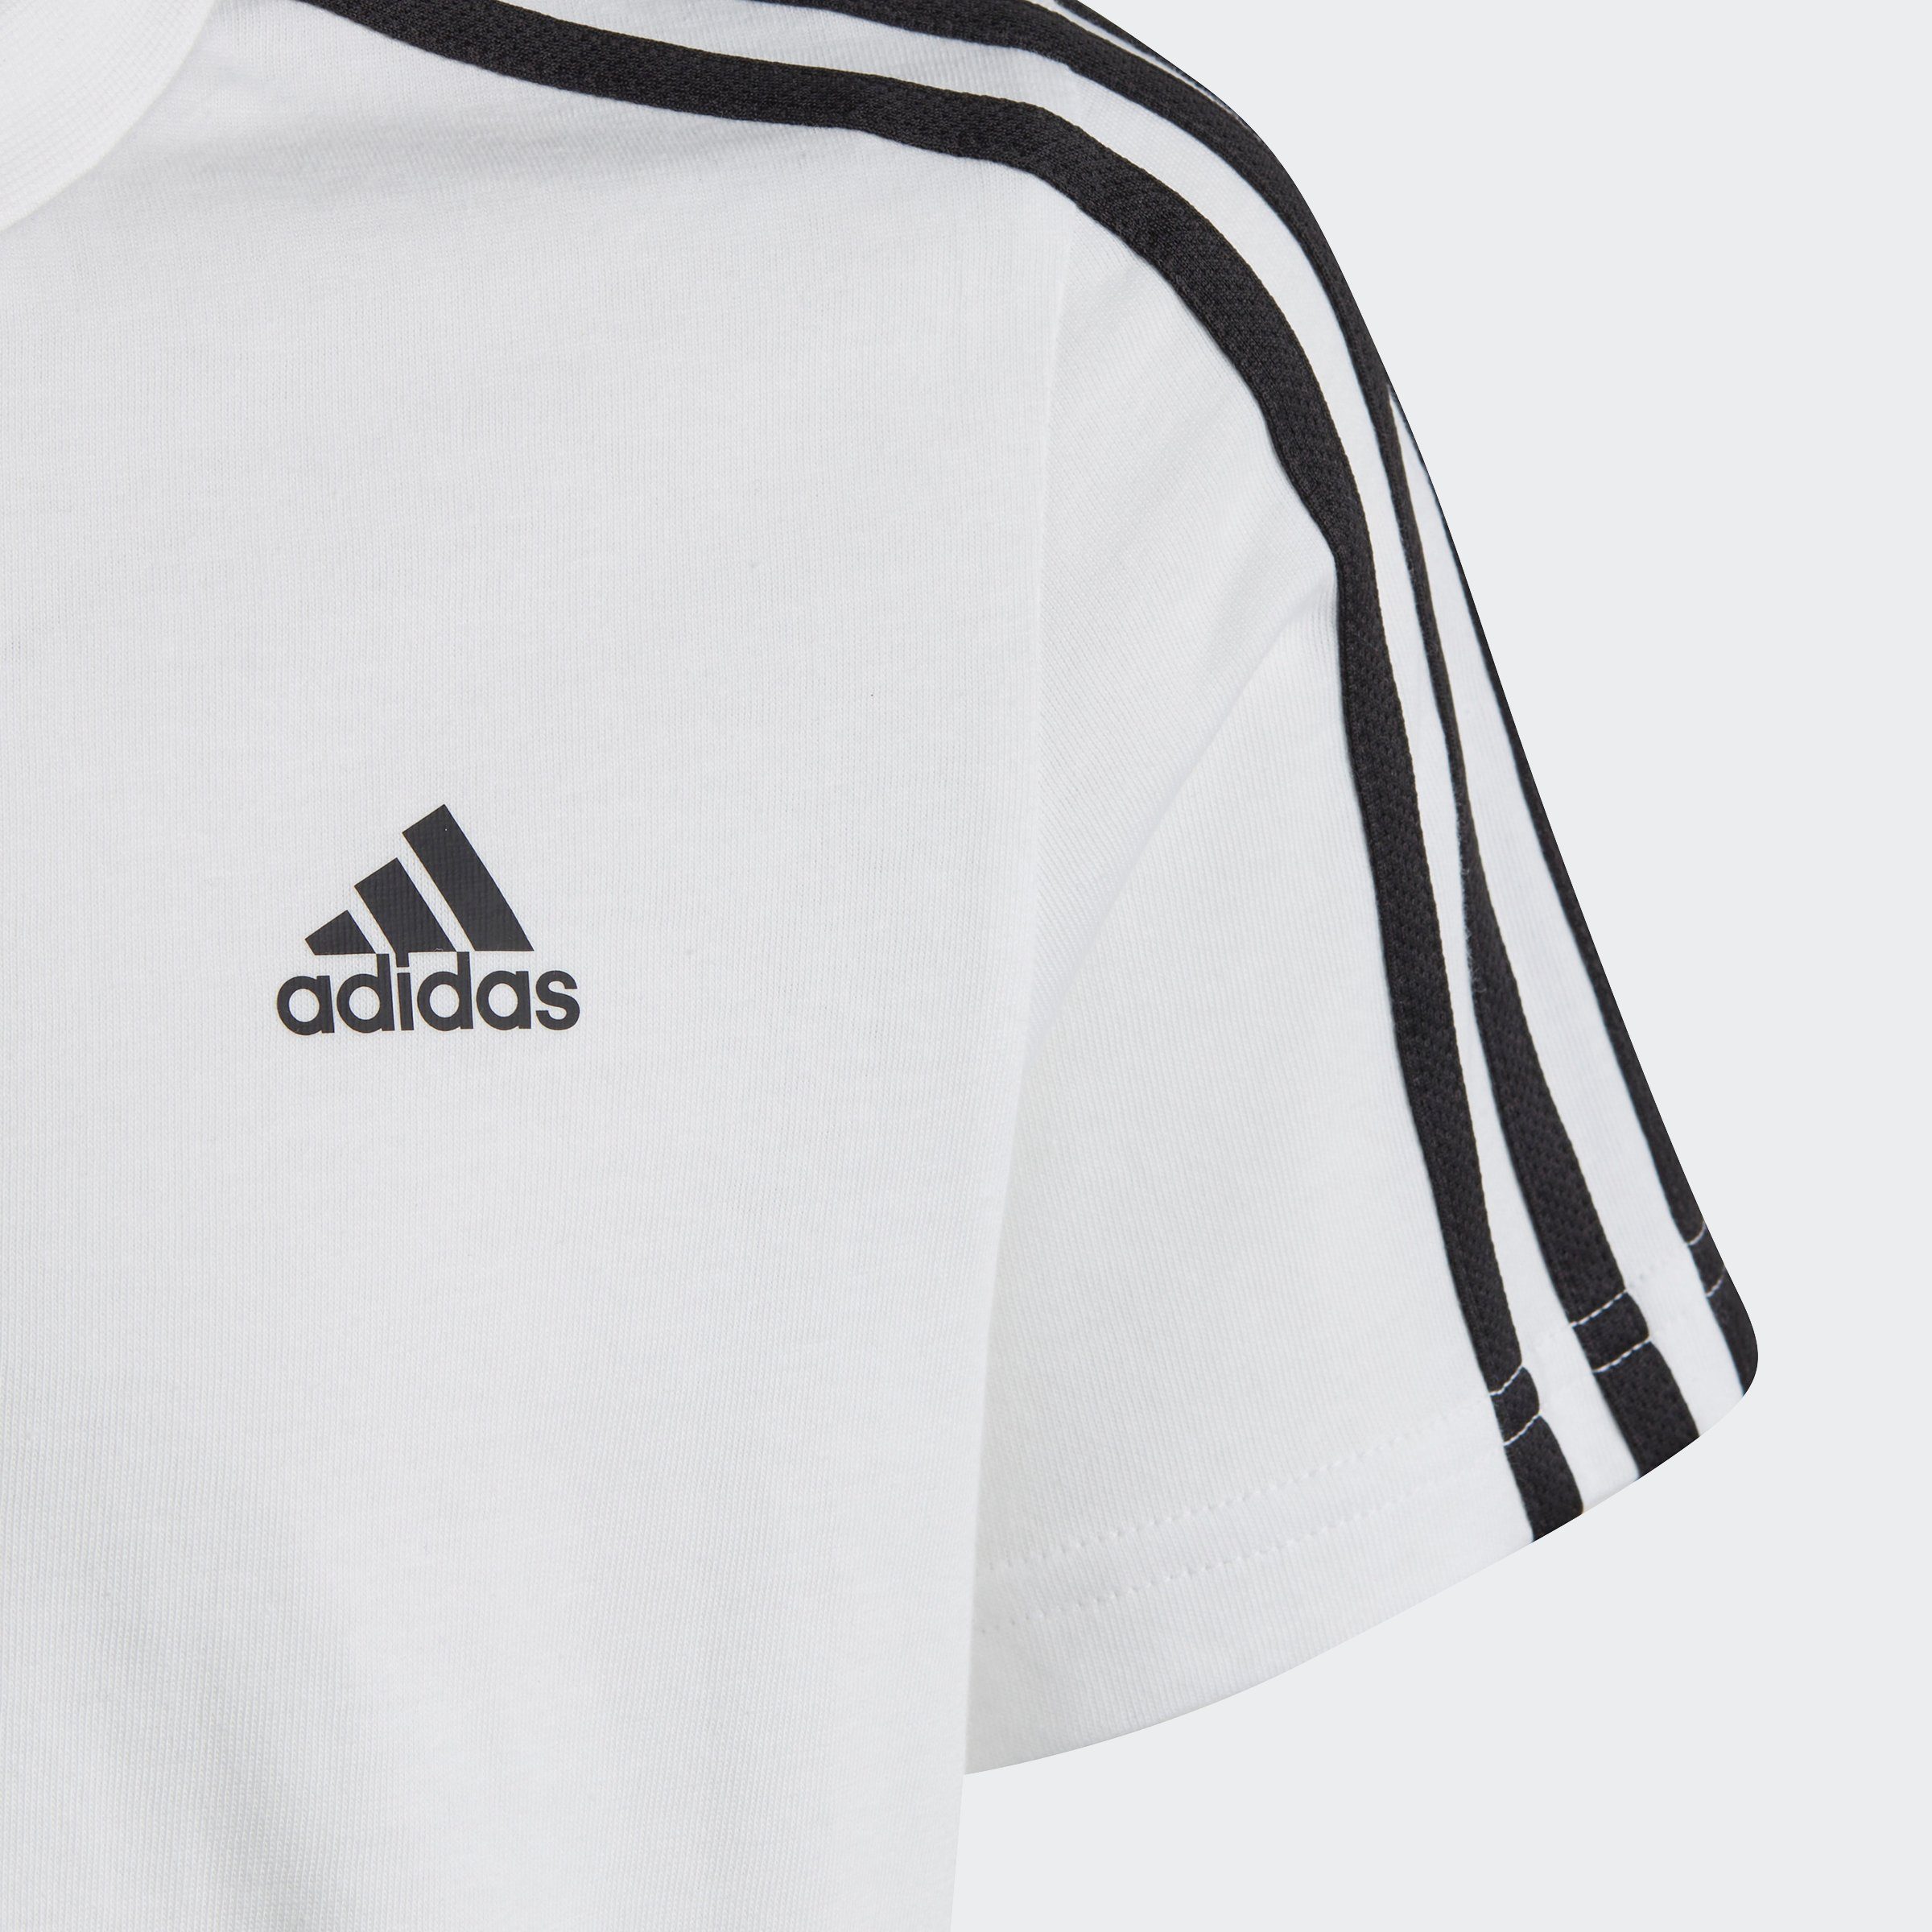 Black U Sportswear T-Shirt White 3S / TEE adidas